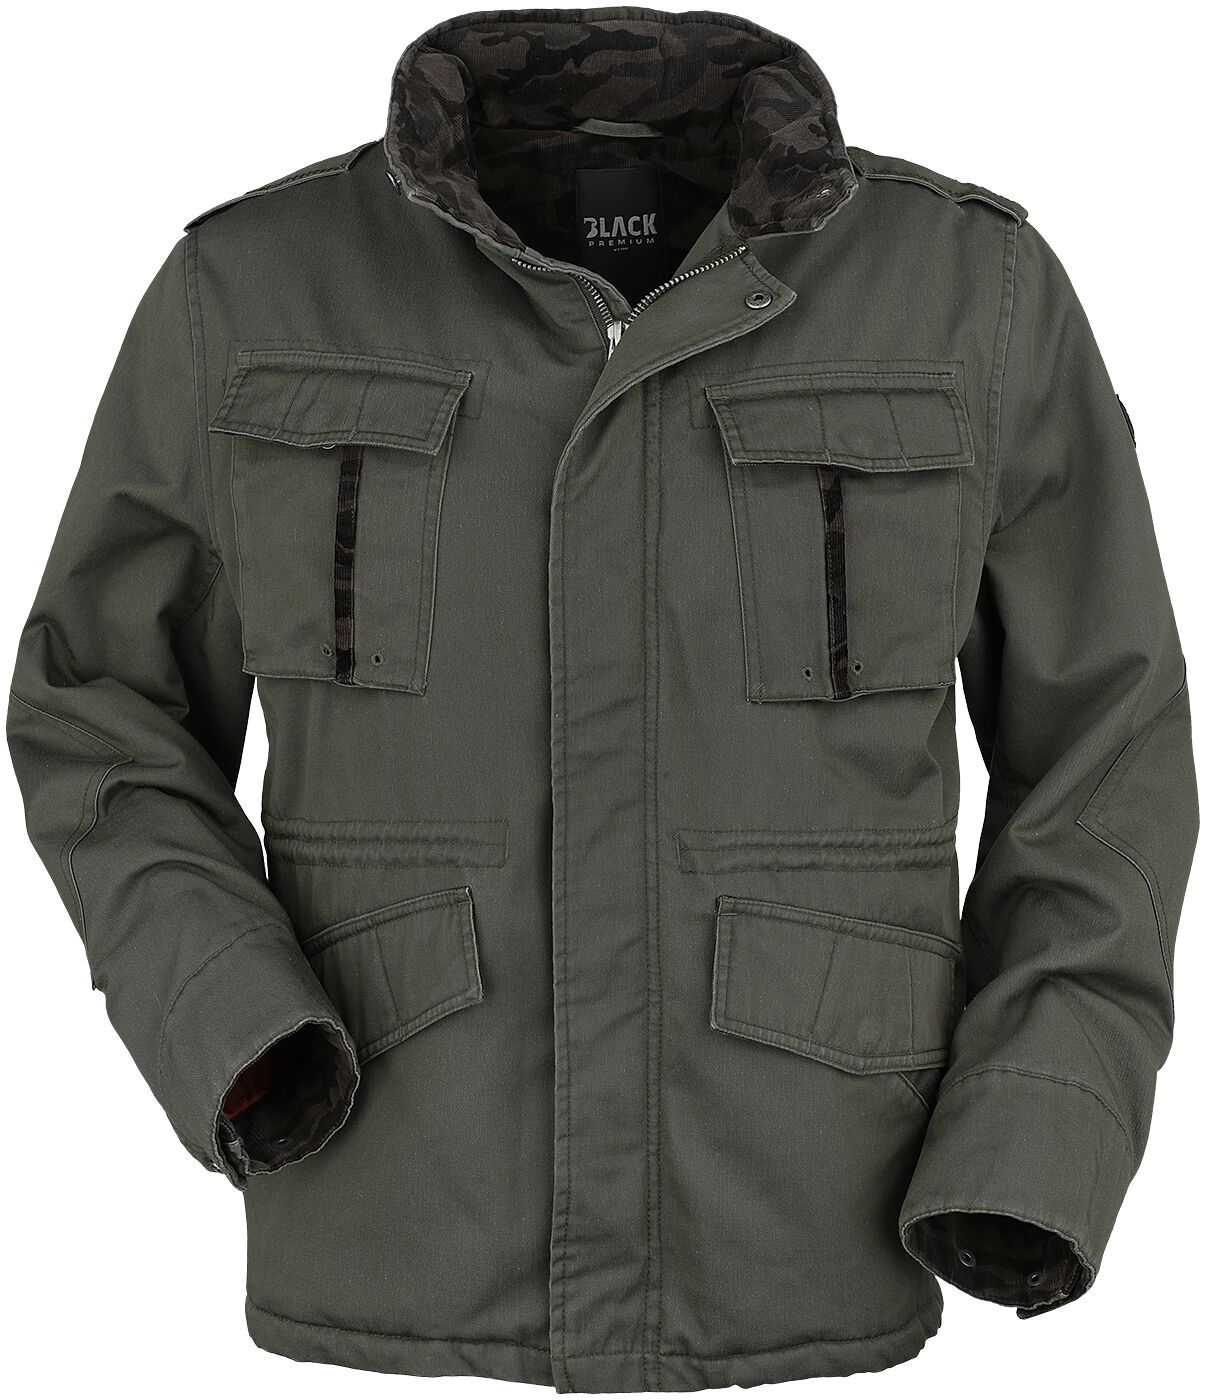 Black Premium by EMP Jacket with hidden hood Winterjacke oliv olivcamo in XL